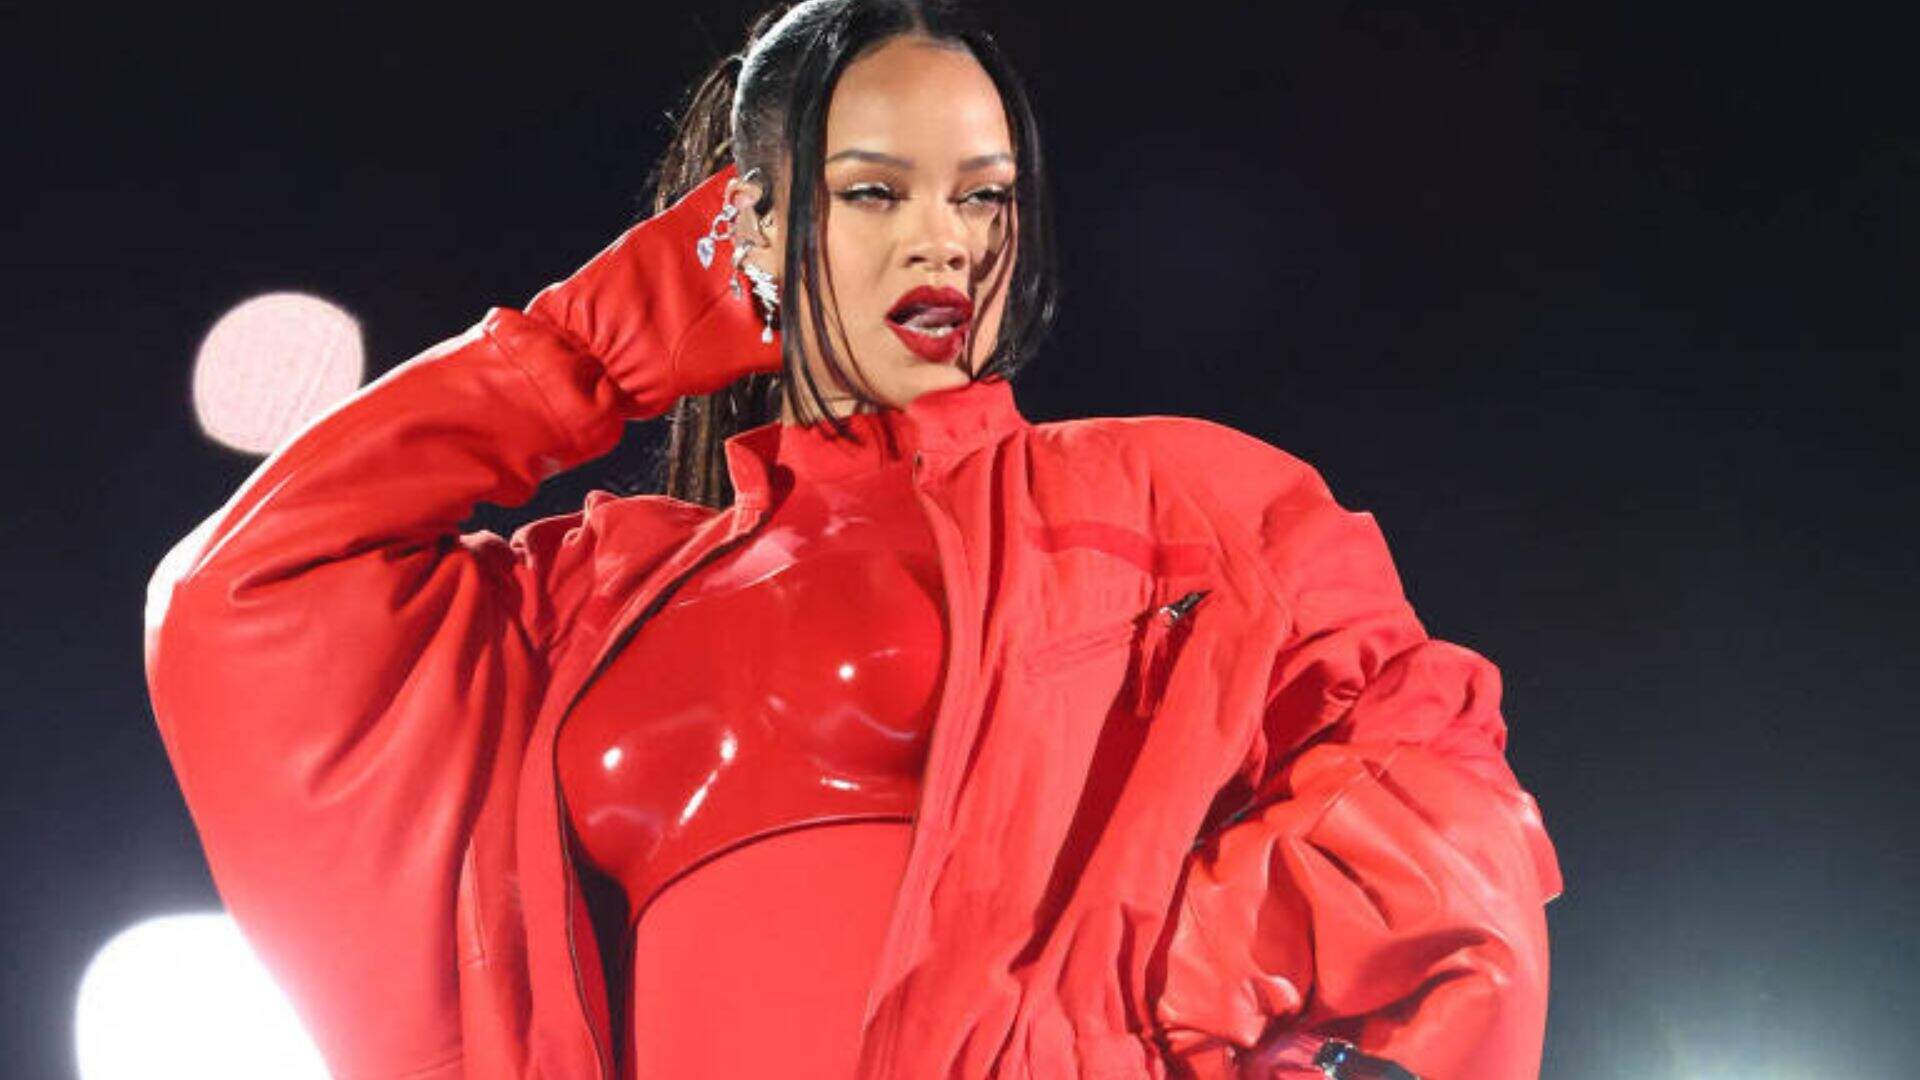 De surpresa, Rihanna confirma segunda gravidez durante show incrível no Super Bowl 2023